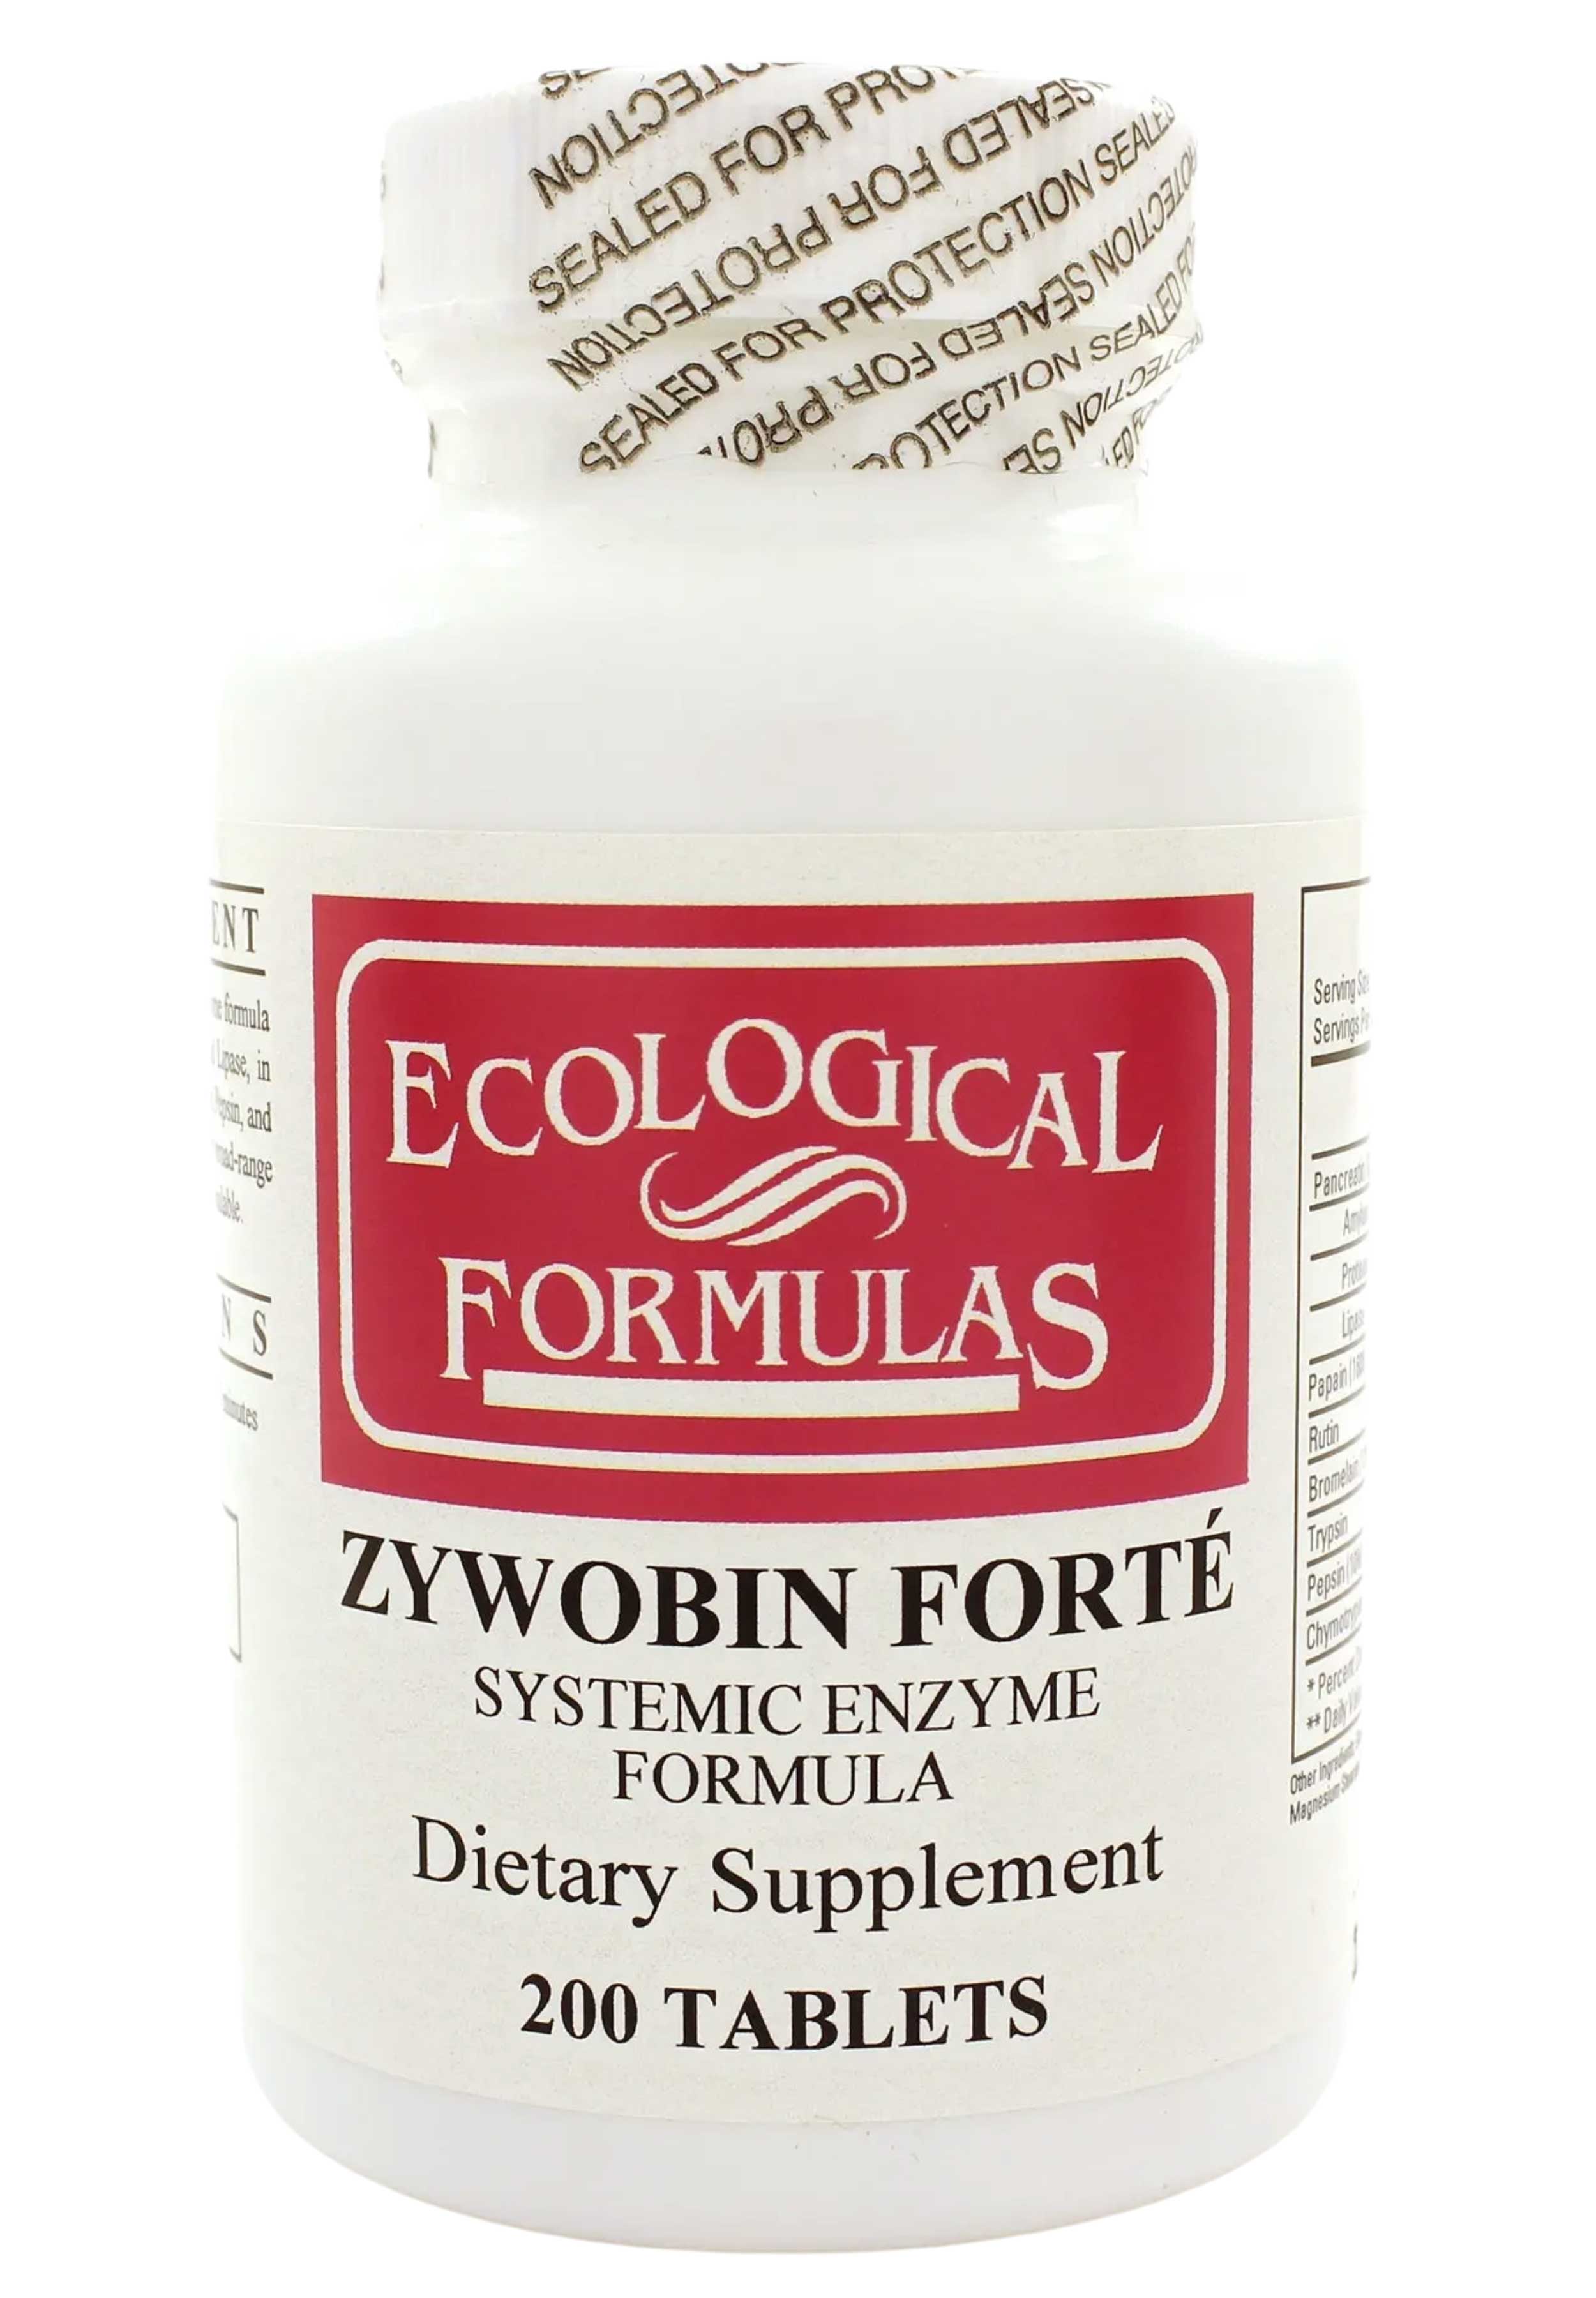 Ecological Formulas/Cardiovascular Research Zywobin Forte